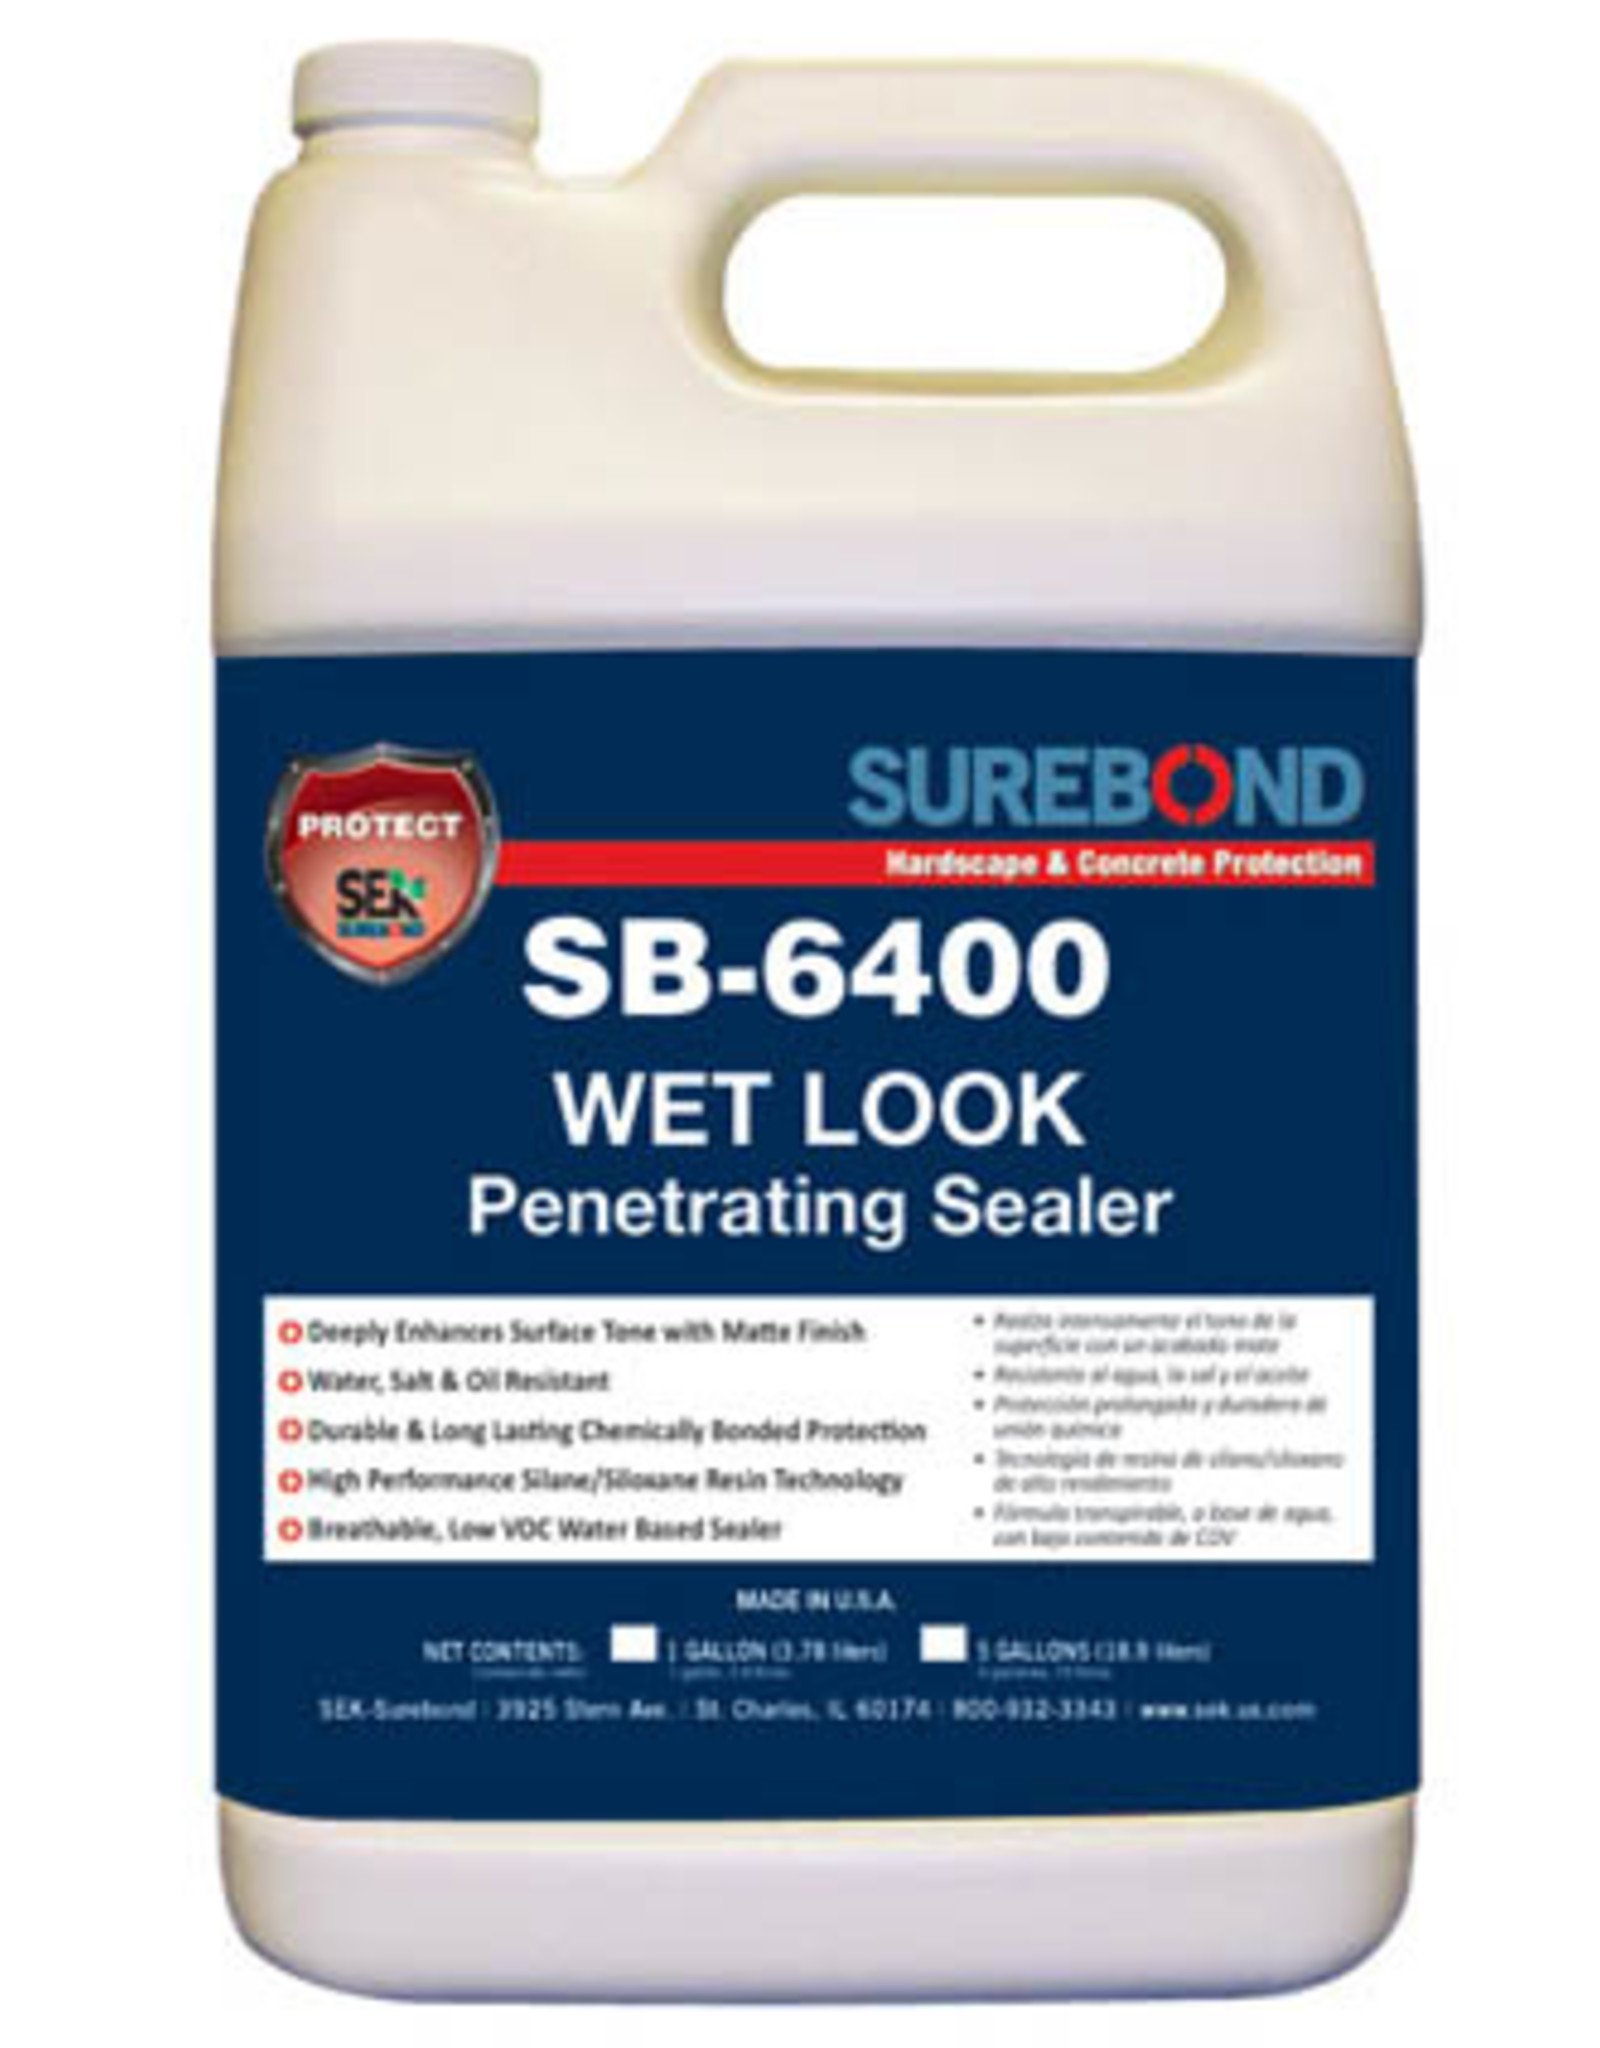 SEK Surebond SB-6400 Wet Look Penetrating Sealer Gallon